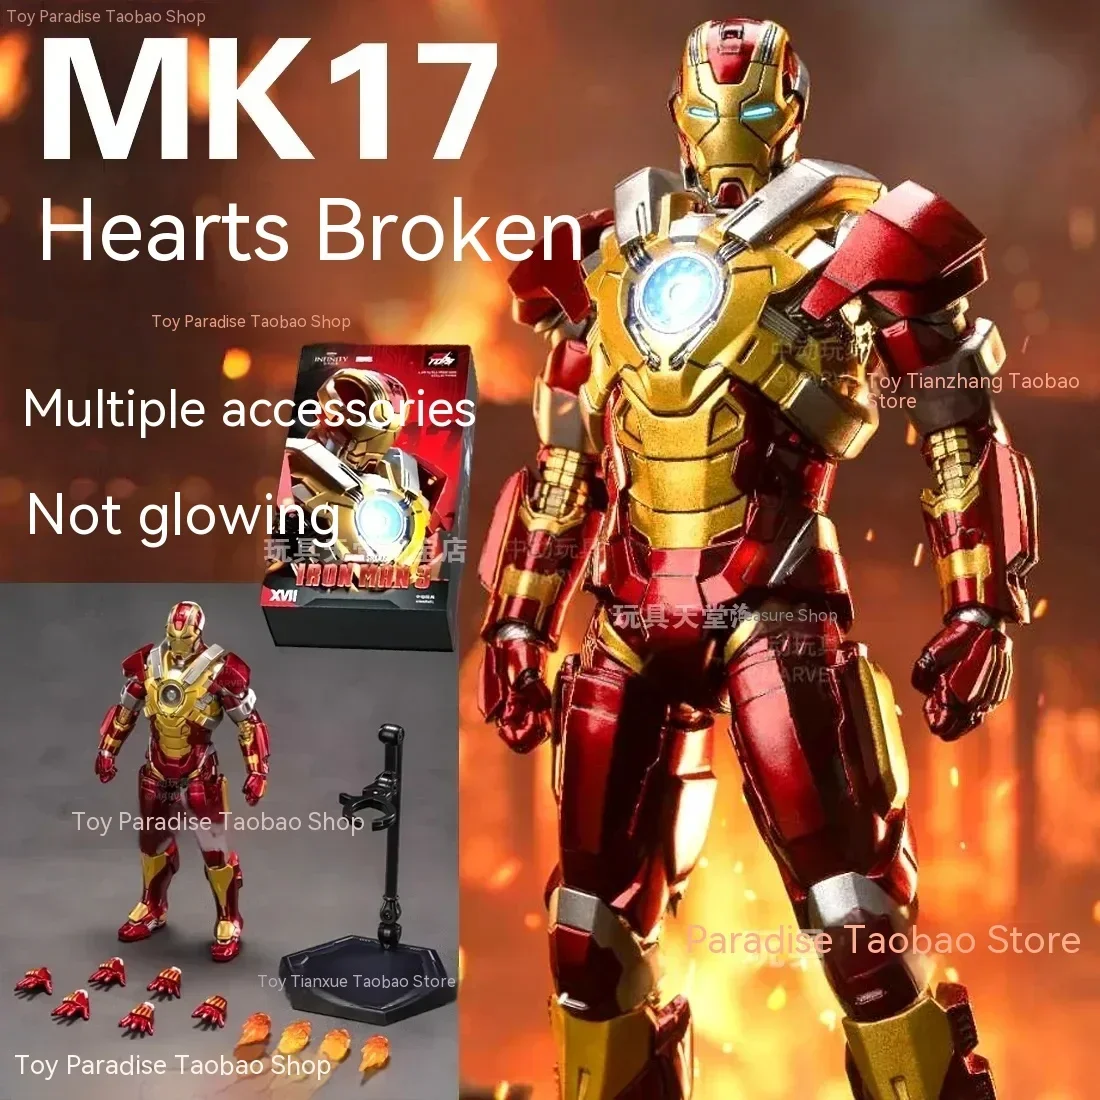 

Zhongdong Iron Man New Mk21 Mark Midas Mk17 Heartbreaker Avengers Alliance 7 Peripheral Mobile Handheld Decoration Model Toy Mal